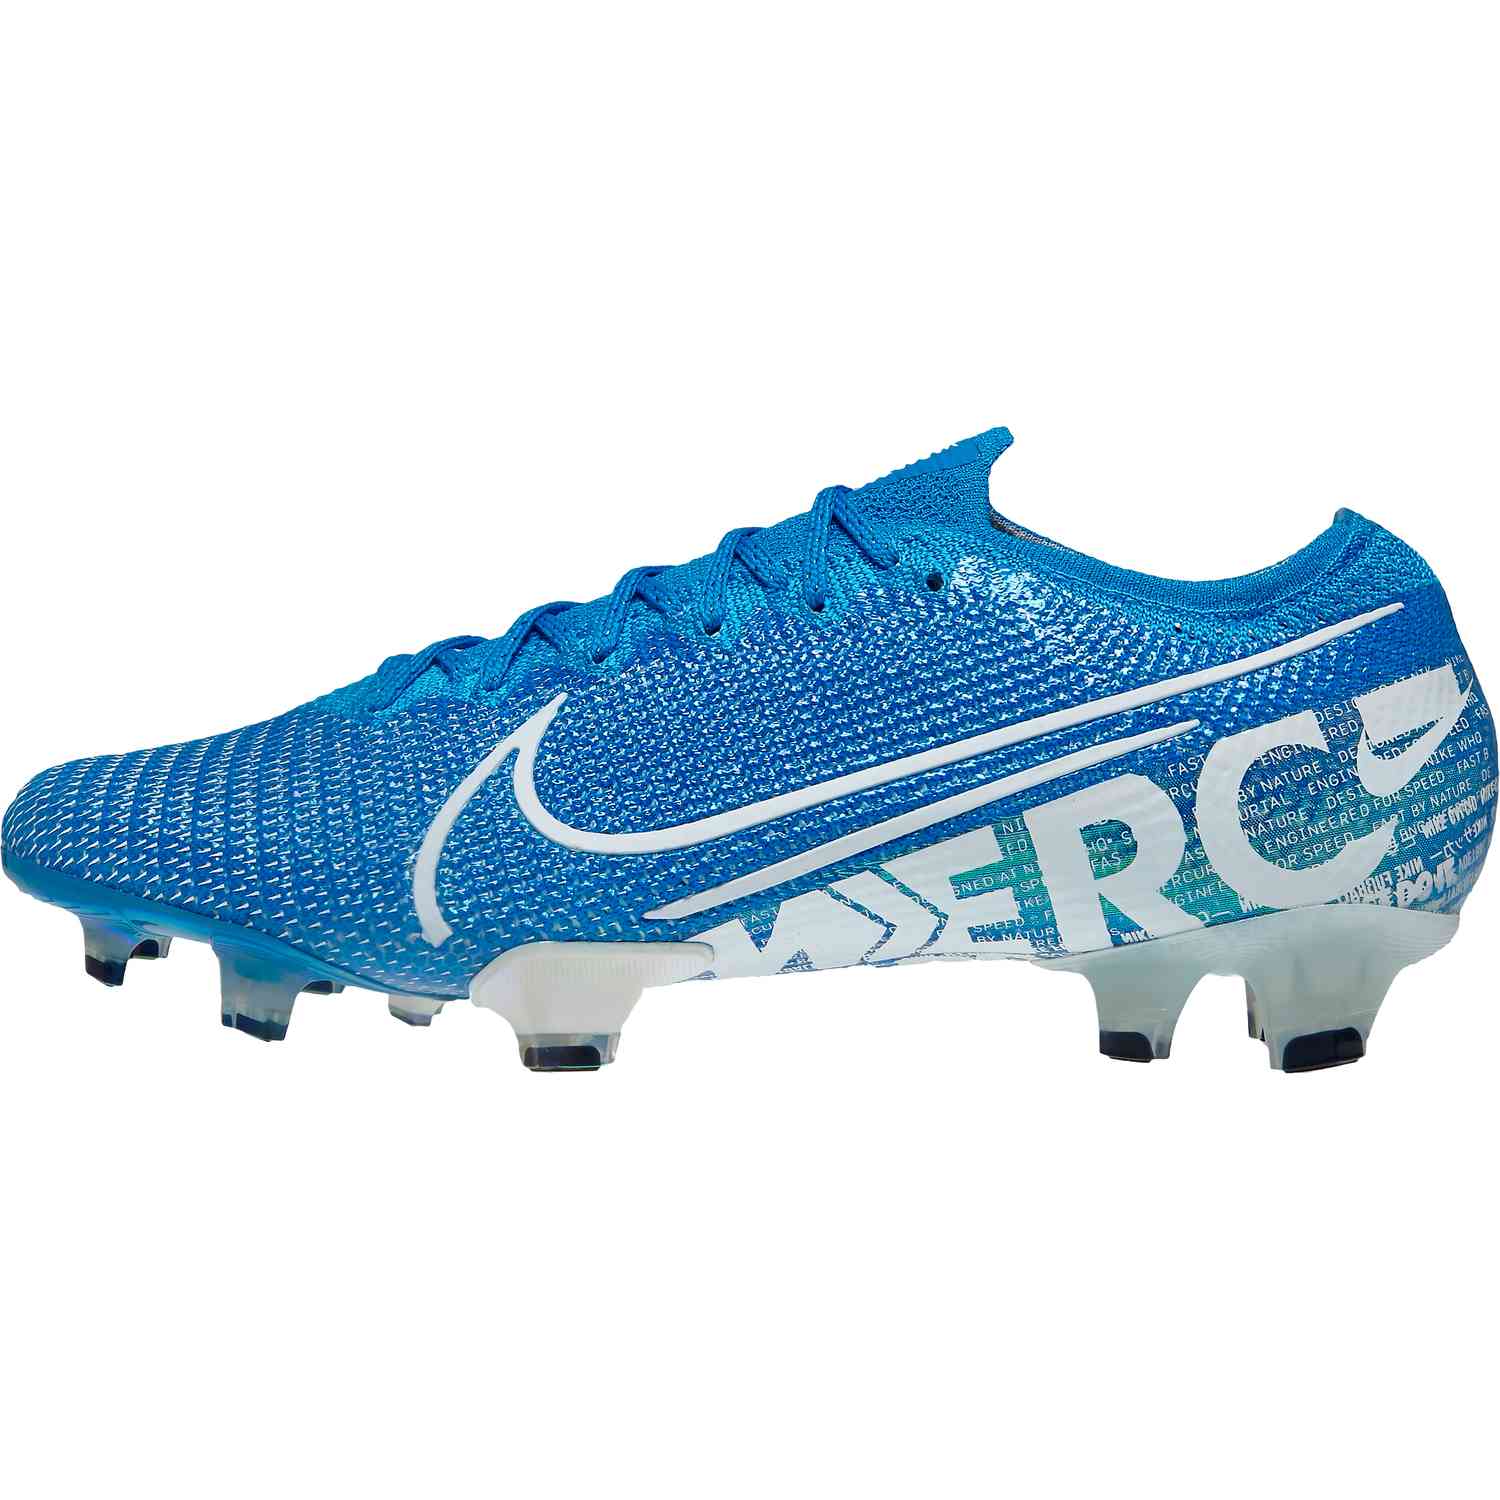 Nike vapor 13 elite fg blue white boots totalsports